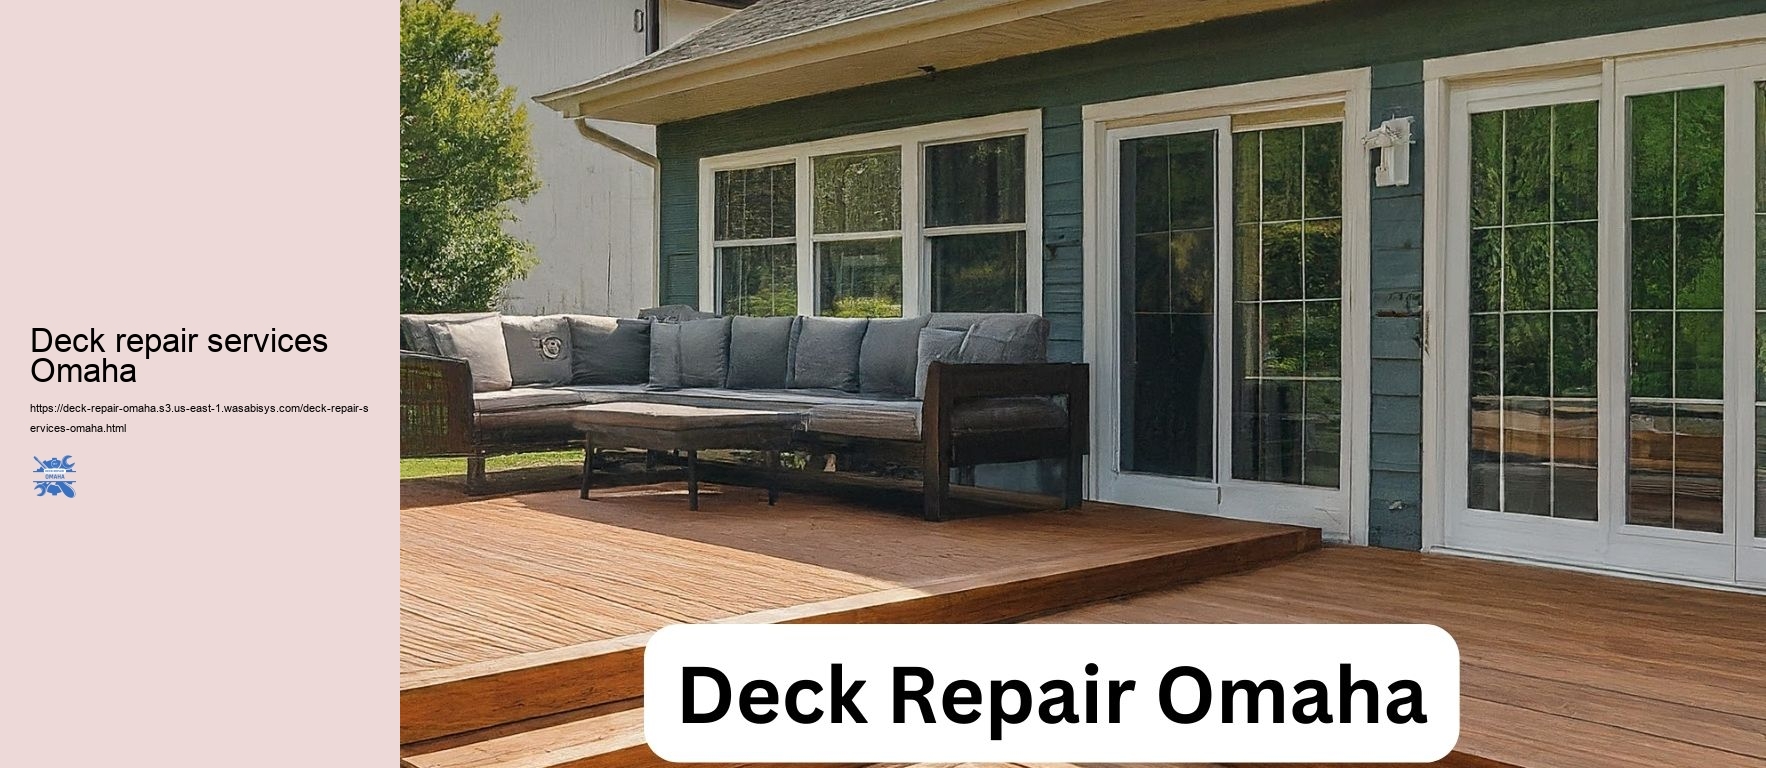 Deck repair services Omaha